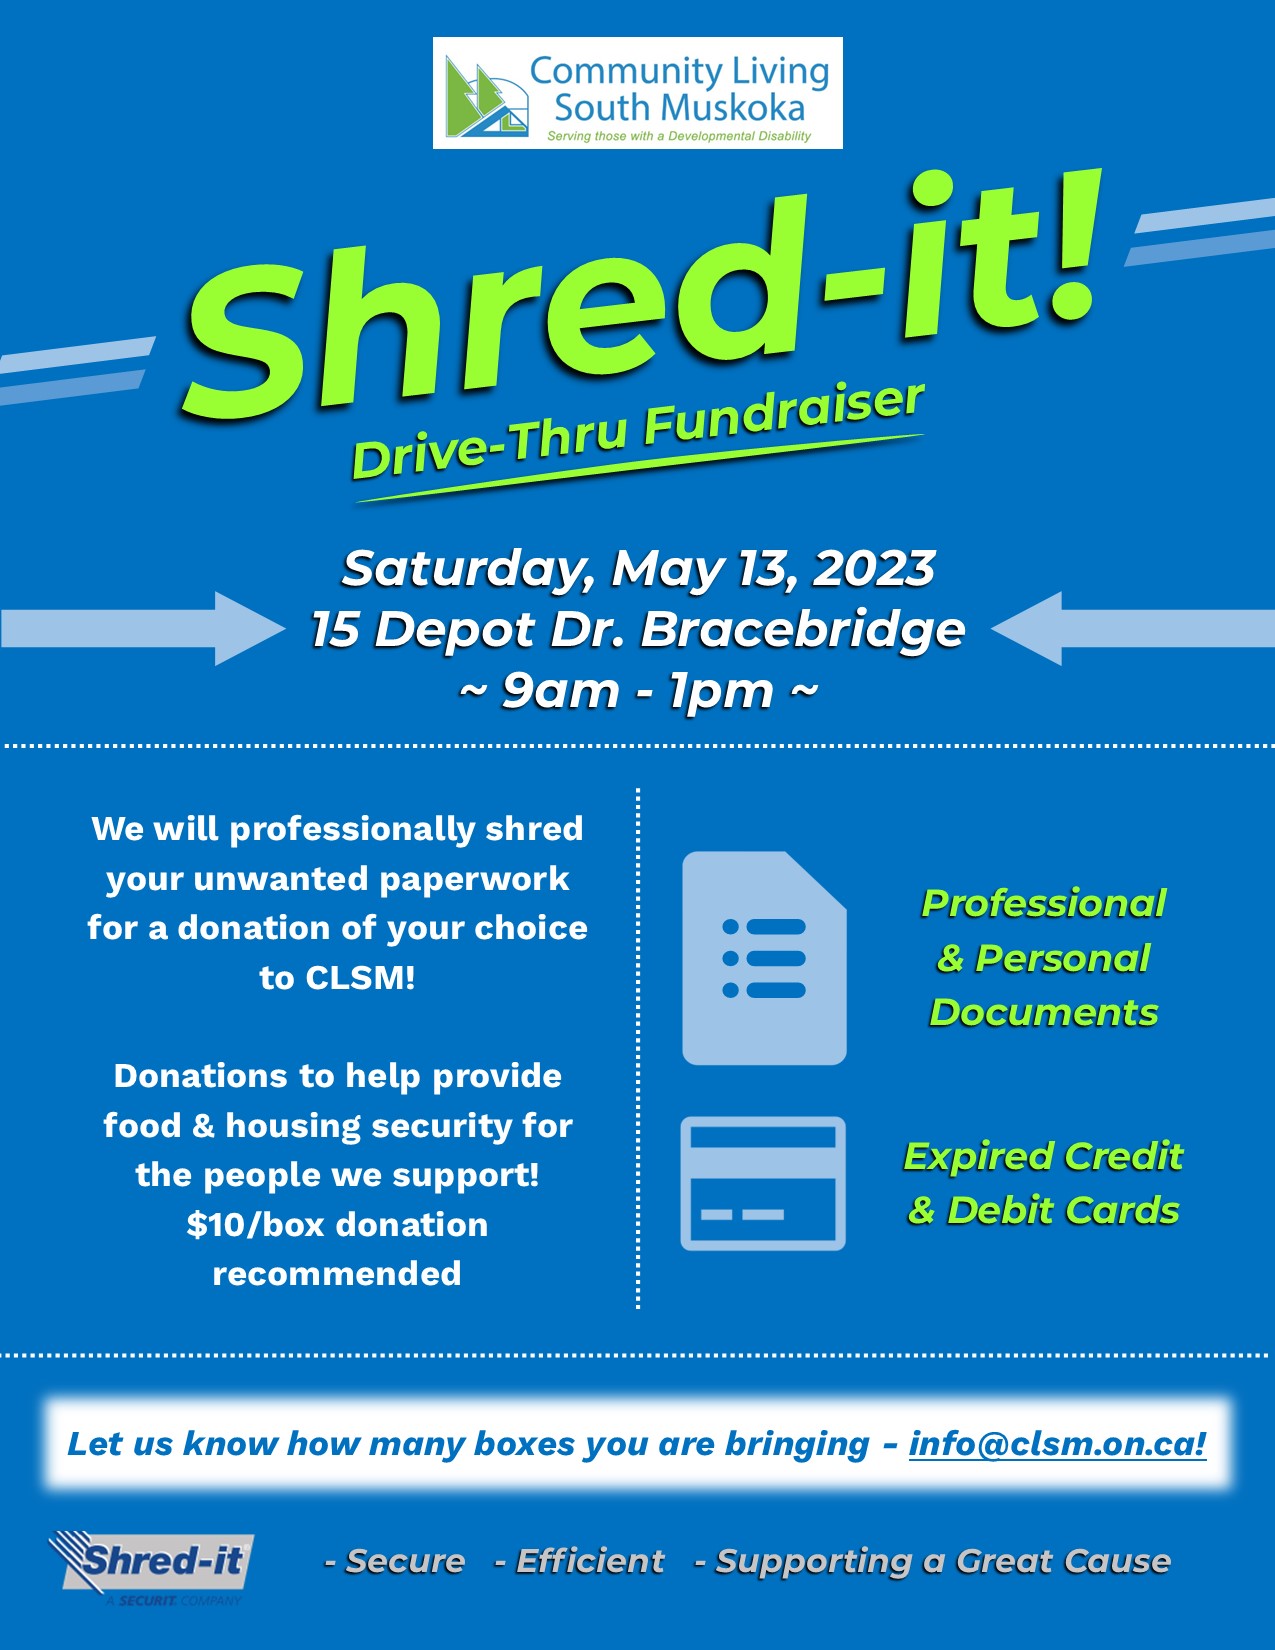 Shred-it Drive-Thru Fundraiser